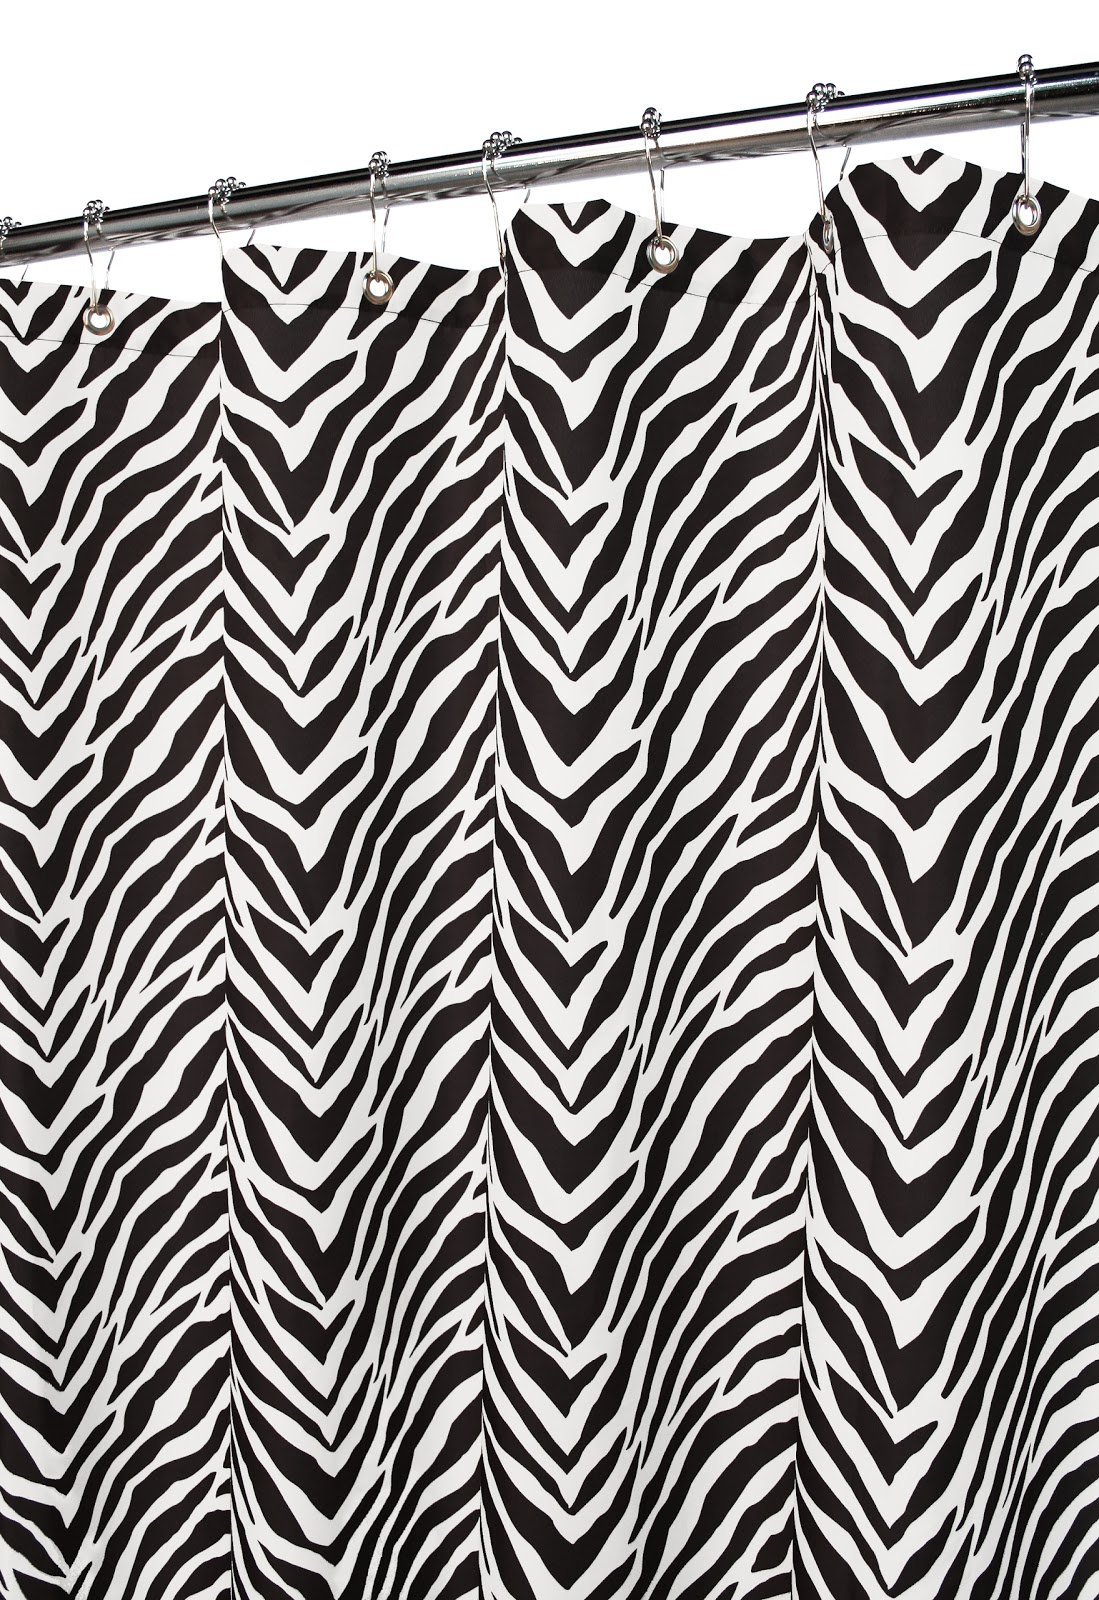 Calgary Shower Curtains: Zebra Pattern